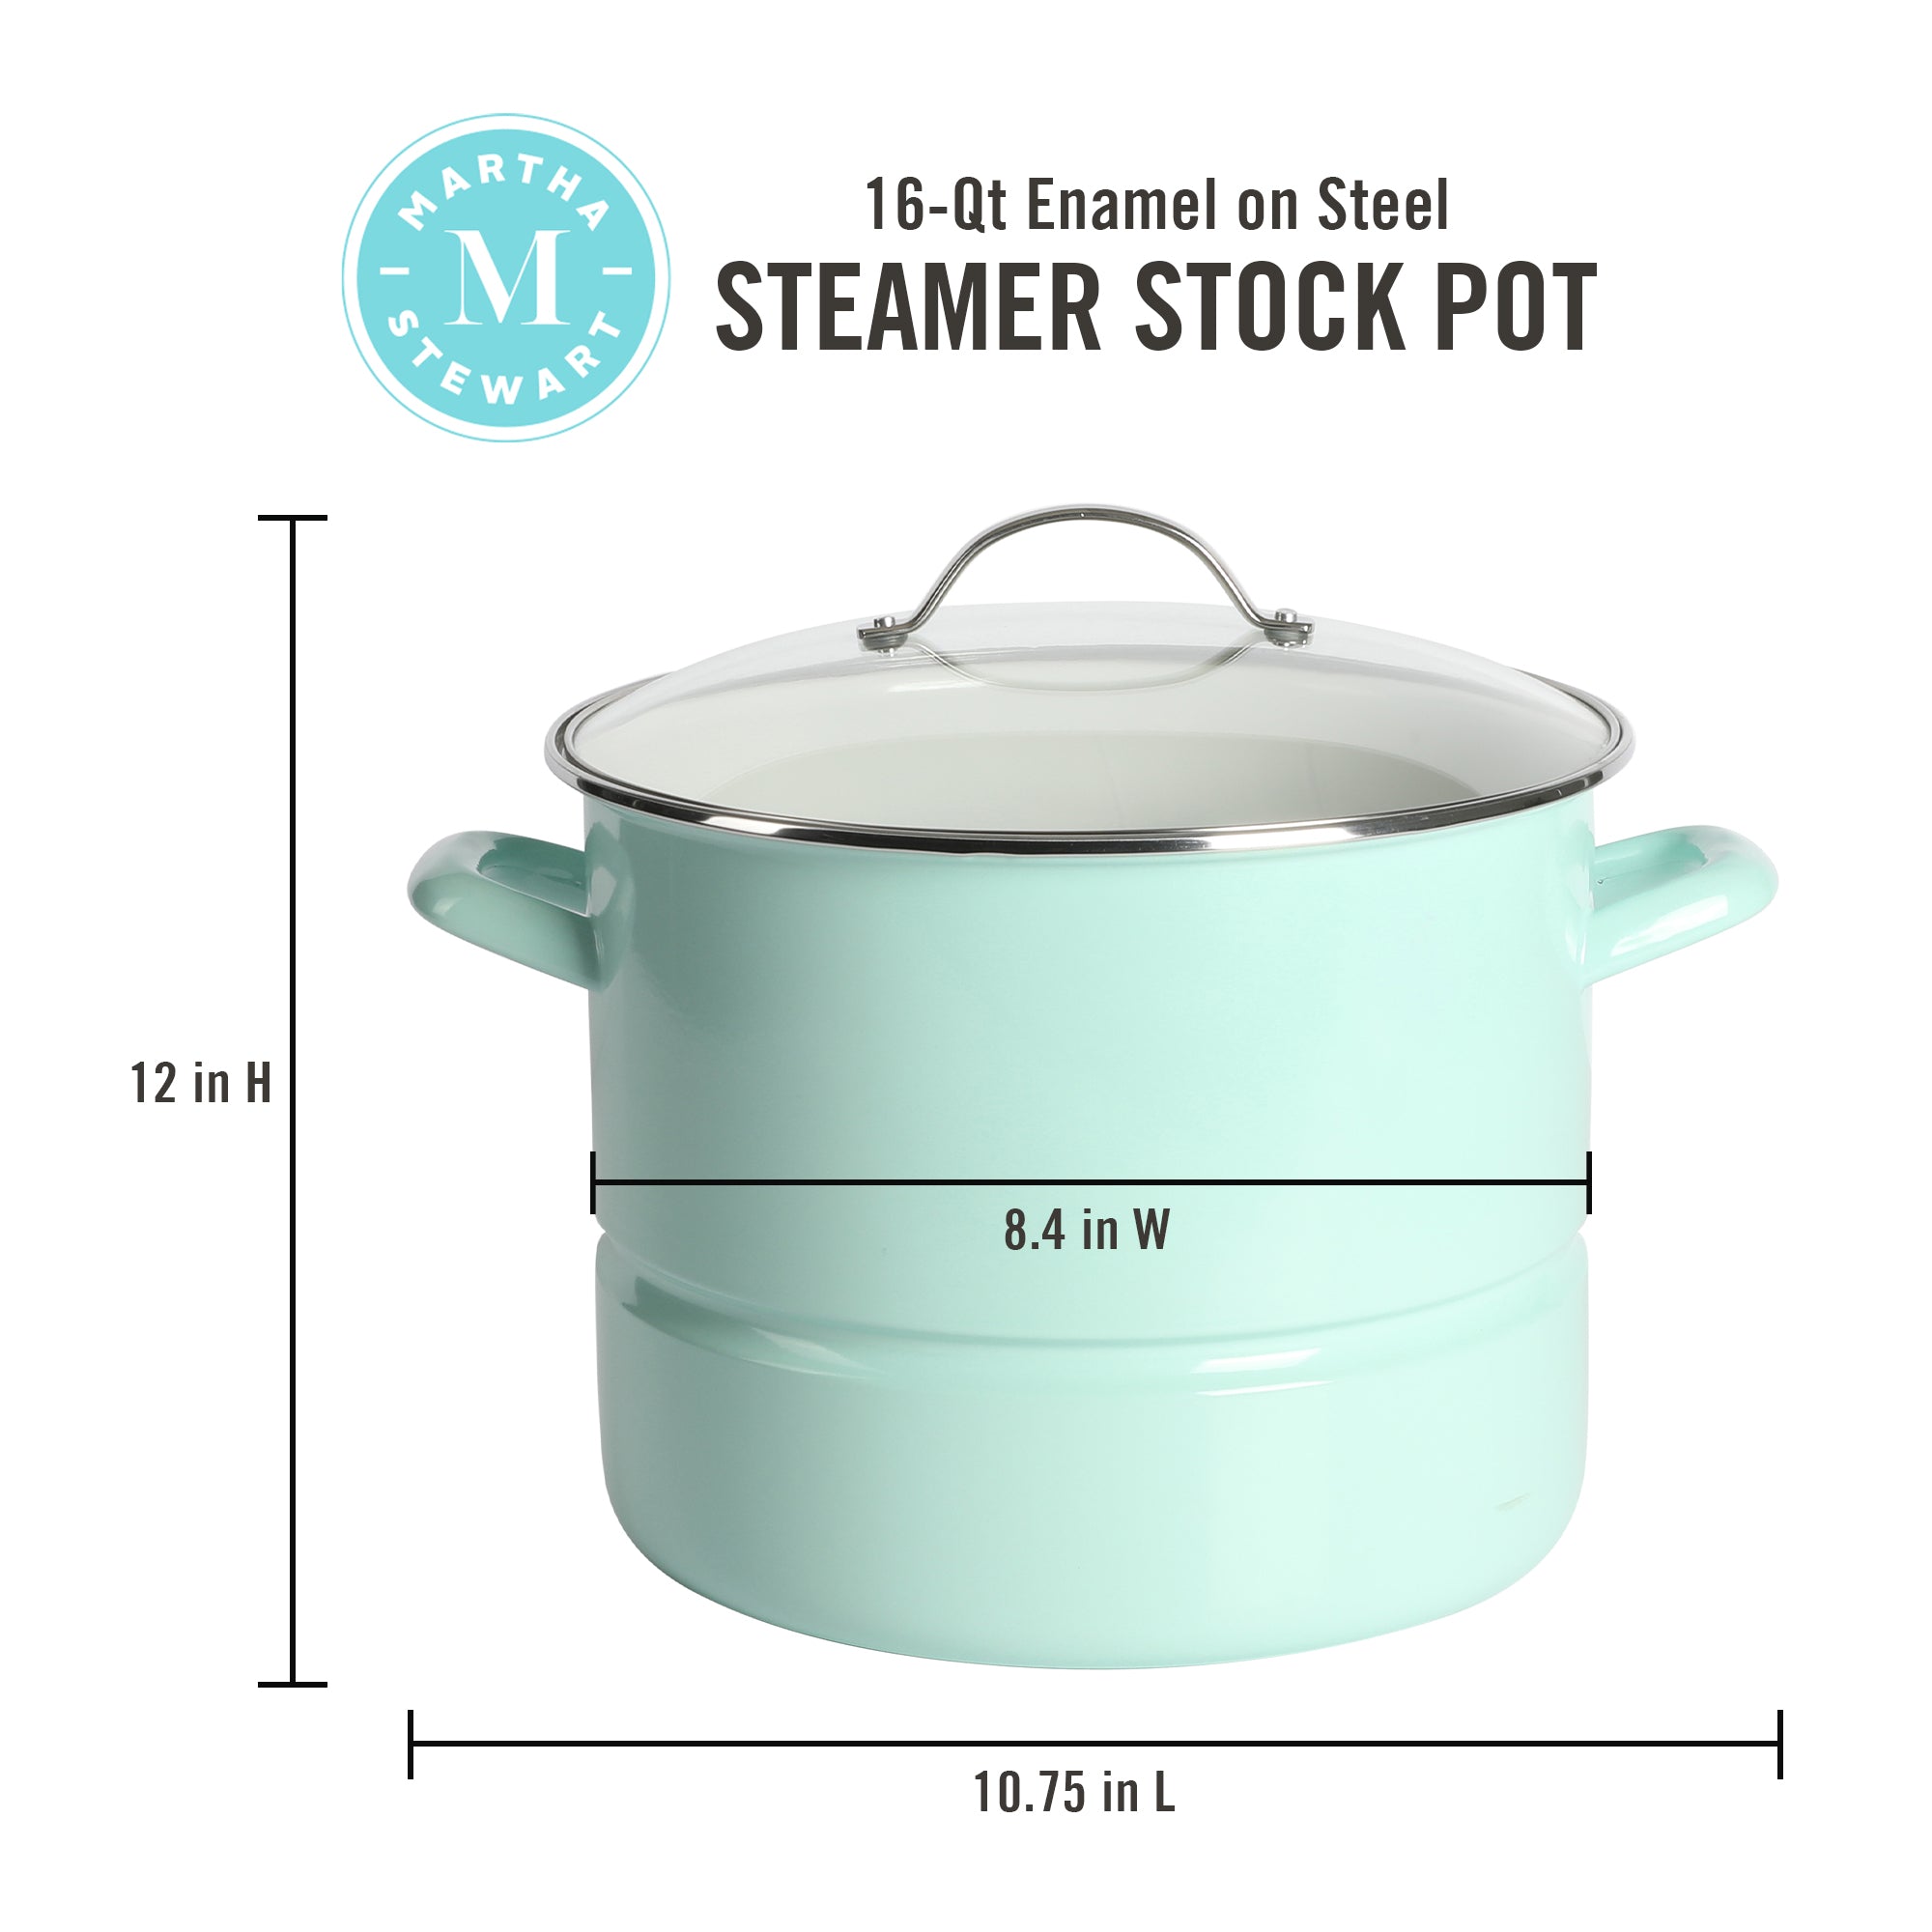 400 Watt Stainless Steel Food Steamer - 4 Quart Capacity 